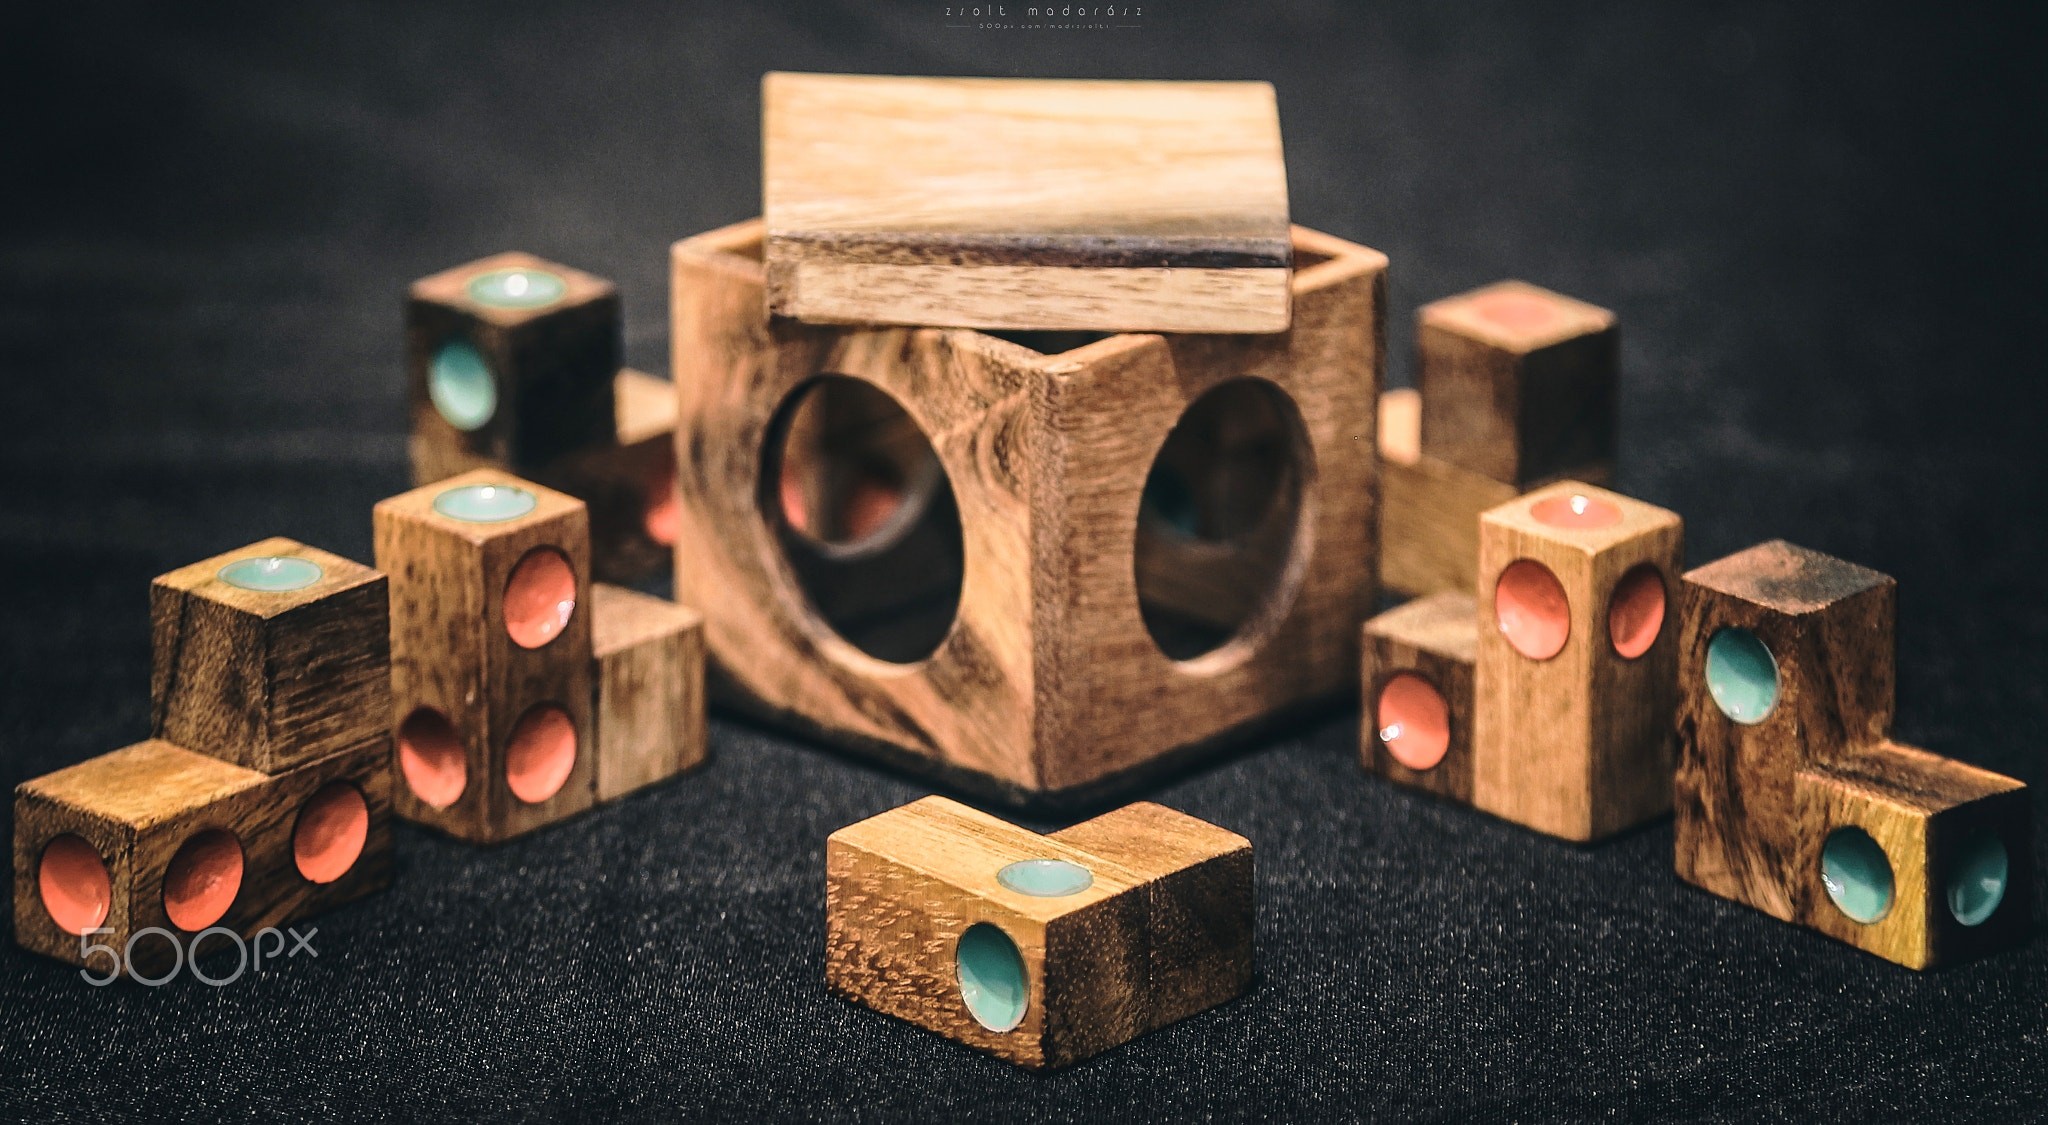 Zsolt Madarász, Wood, Cube, 500px Wallpaper